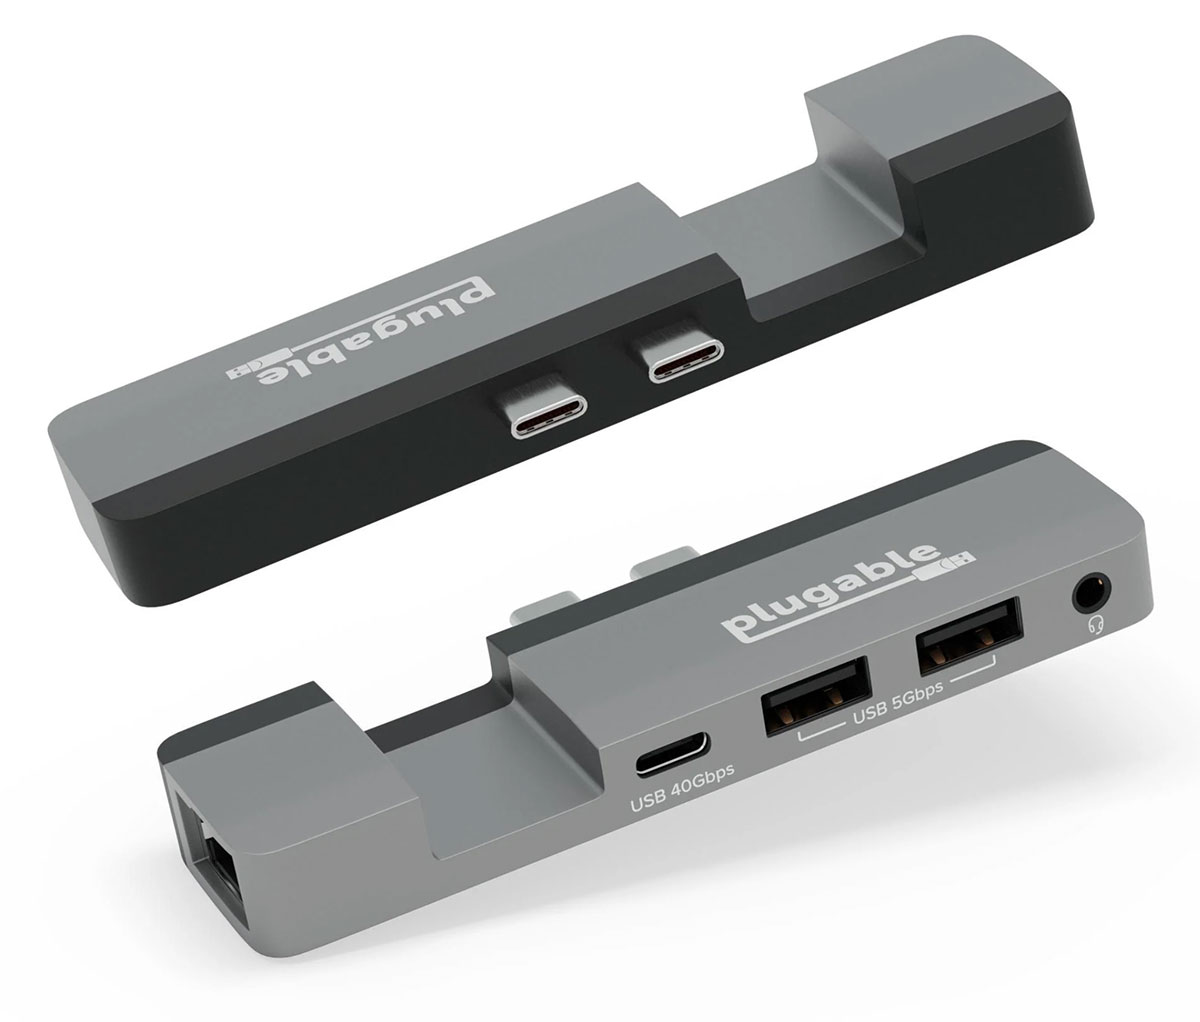 Plugable 5-in-1 USB-C Hub - Best budget 40Gbps USB-C hub for Mac